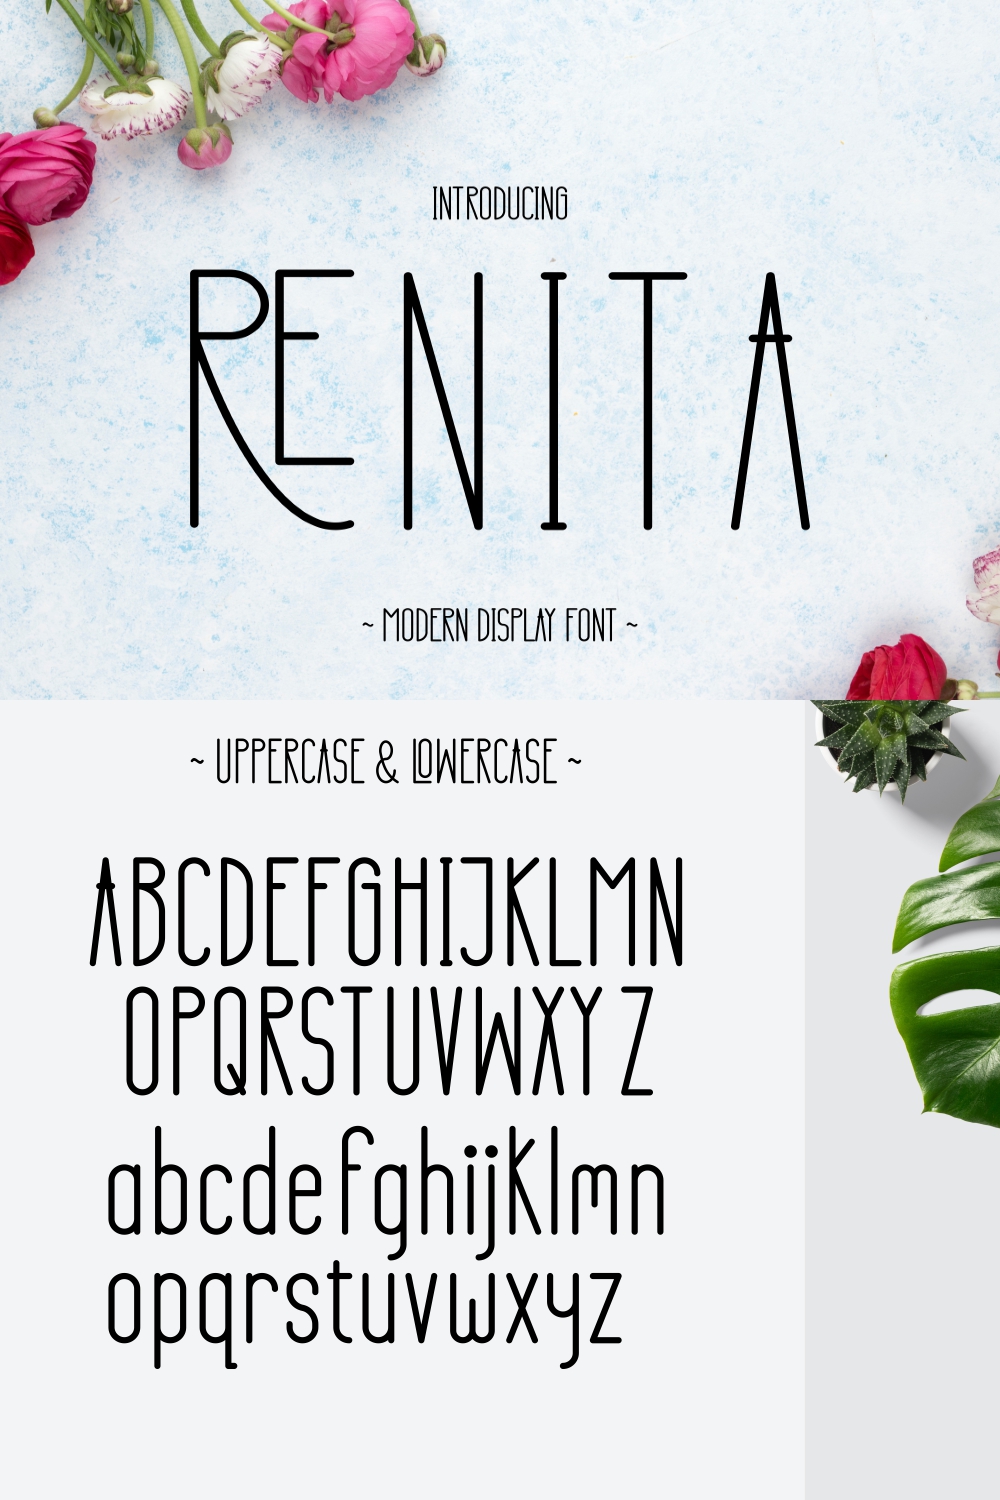 Renita - Modern Display Font pinterest preview image.